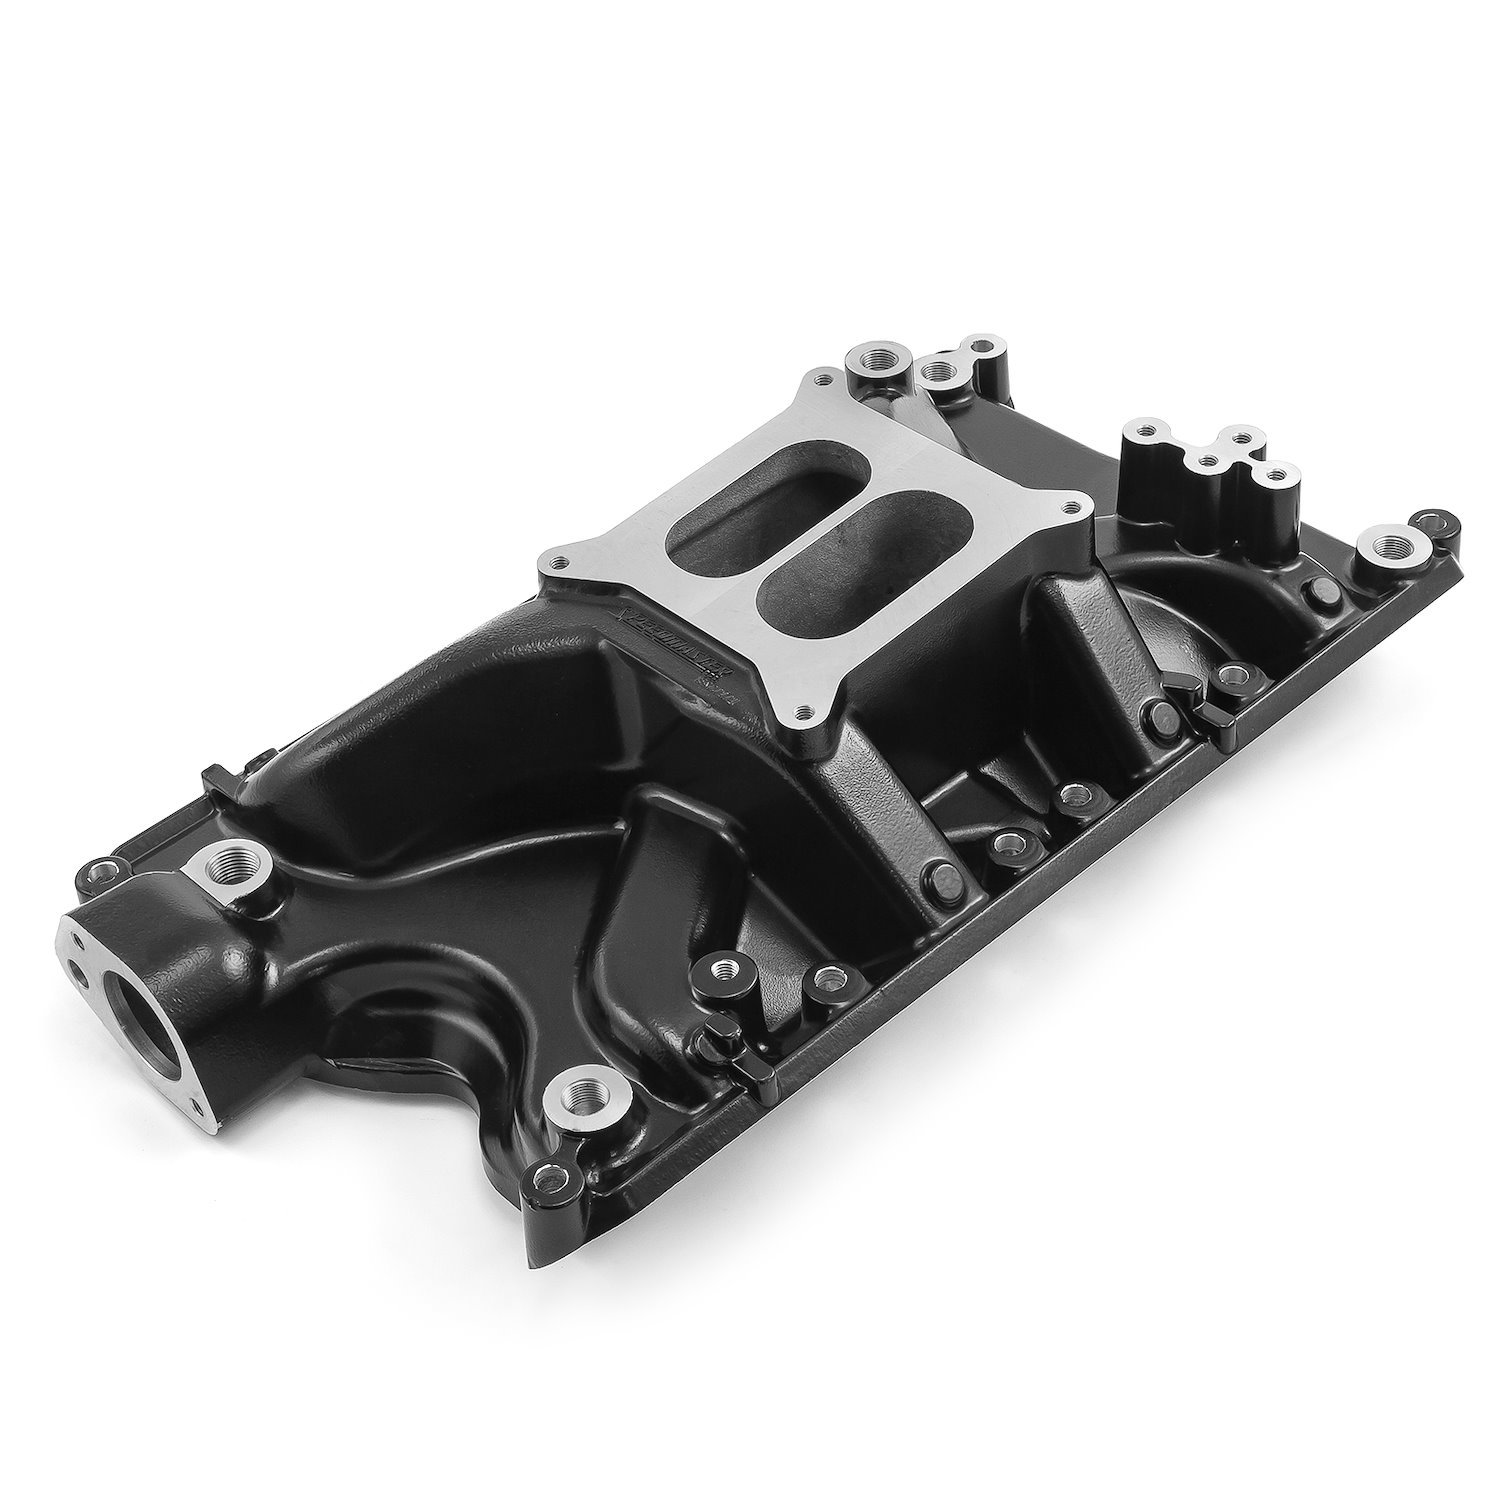 LowRise Intake Manifold Ford 351W - Black Finish